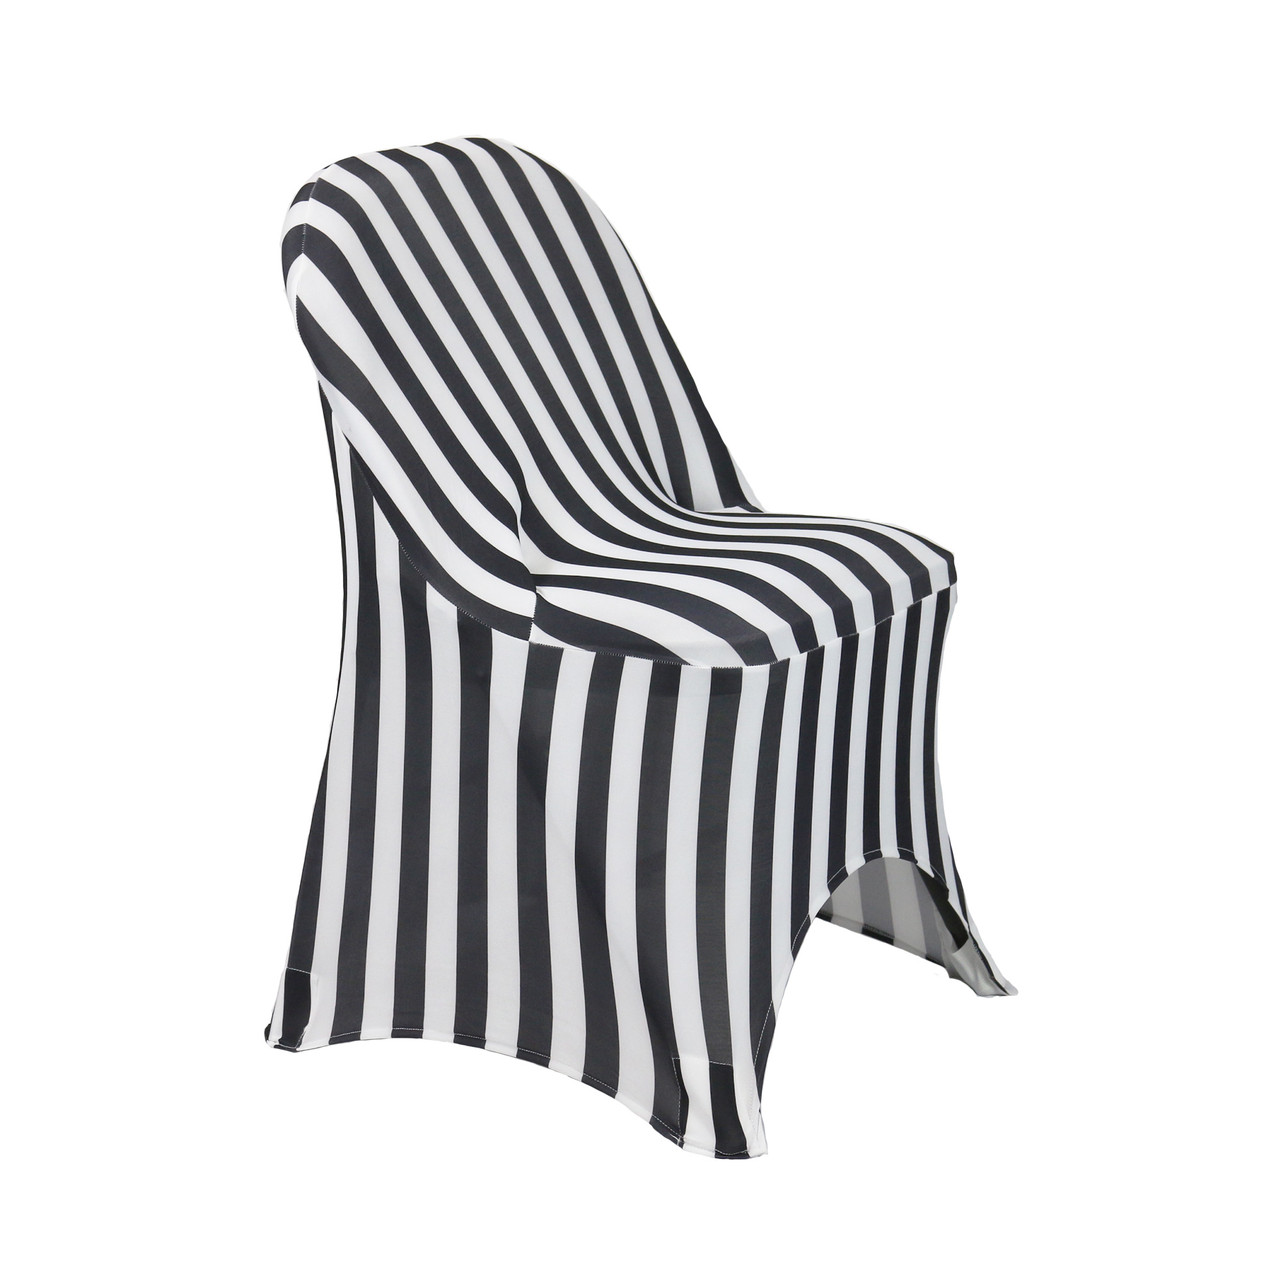 Spandex Folding Chair Cover Black White Striped 2  17607.1579814143 ?c=2